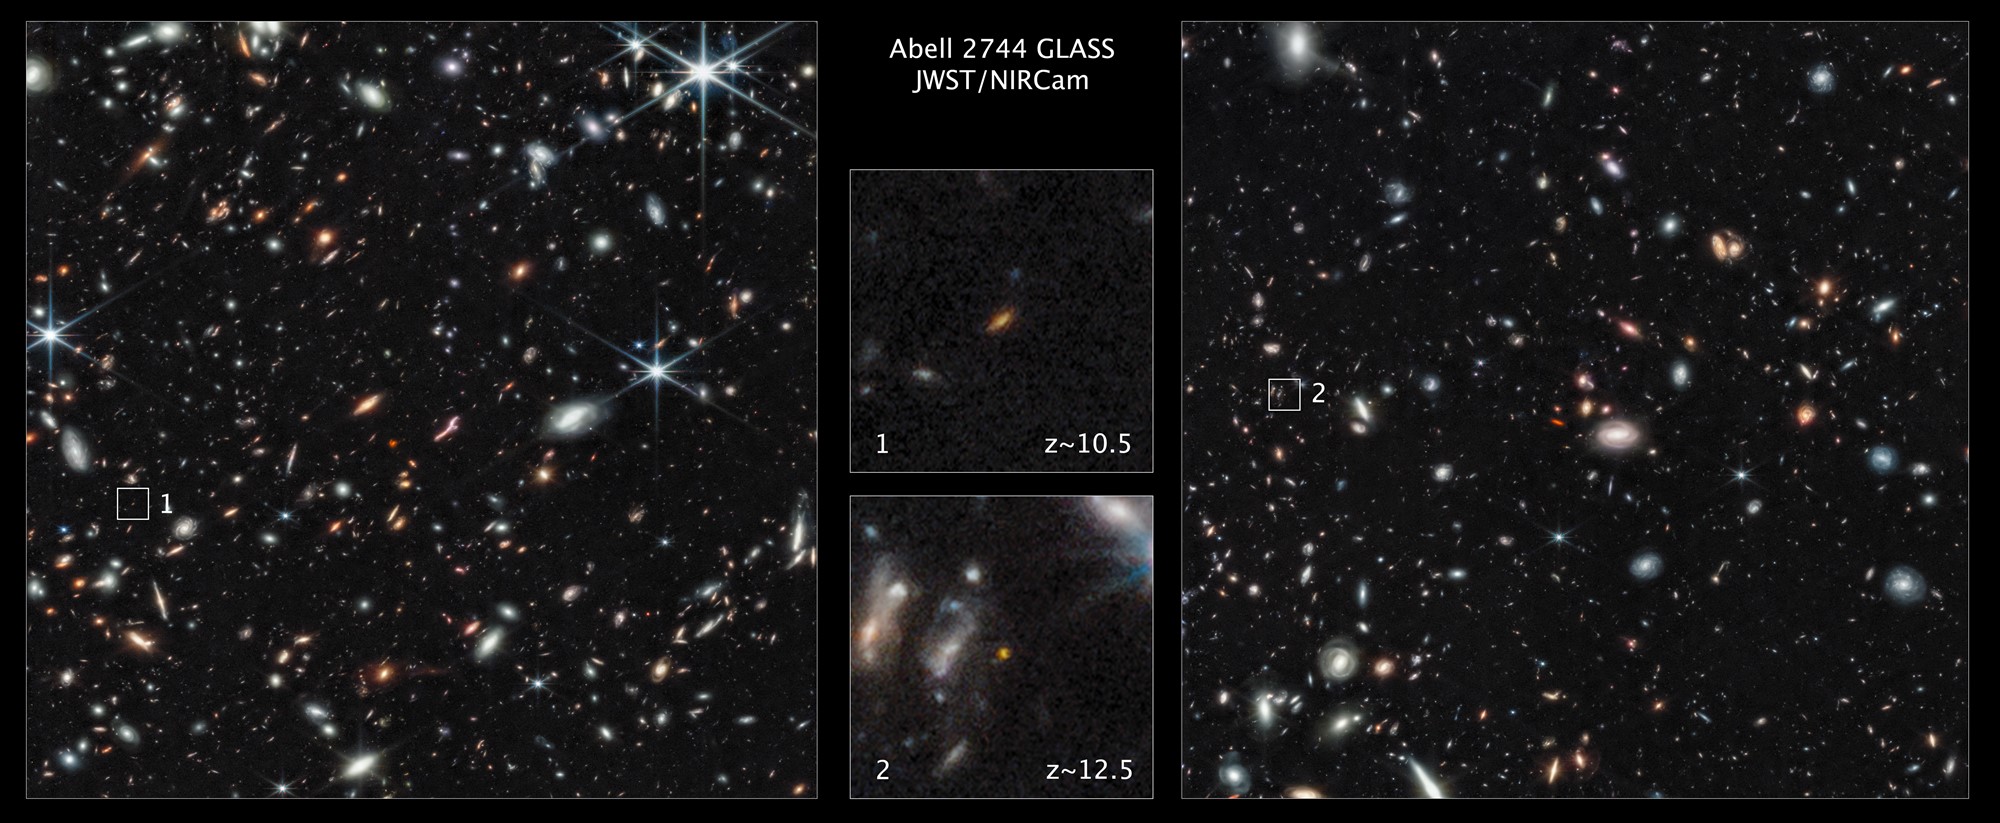 Stars and galaxies seen through a telescope